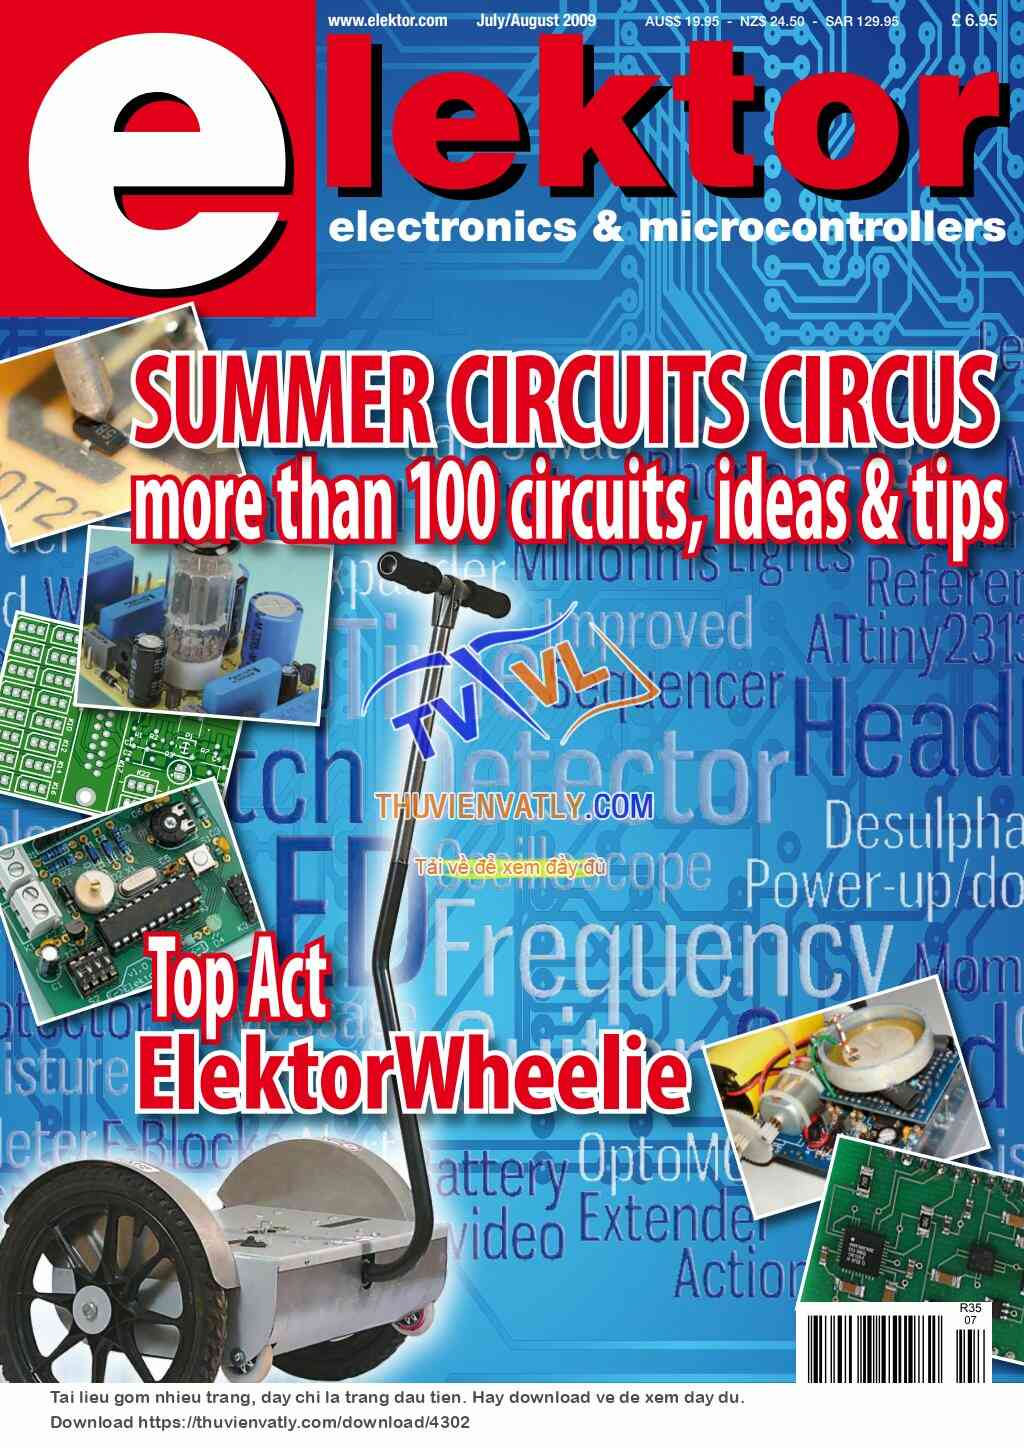 Elektor Electronics Magazine - July&August 2009